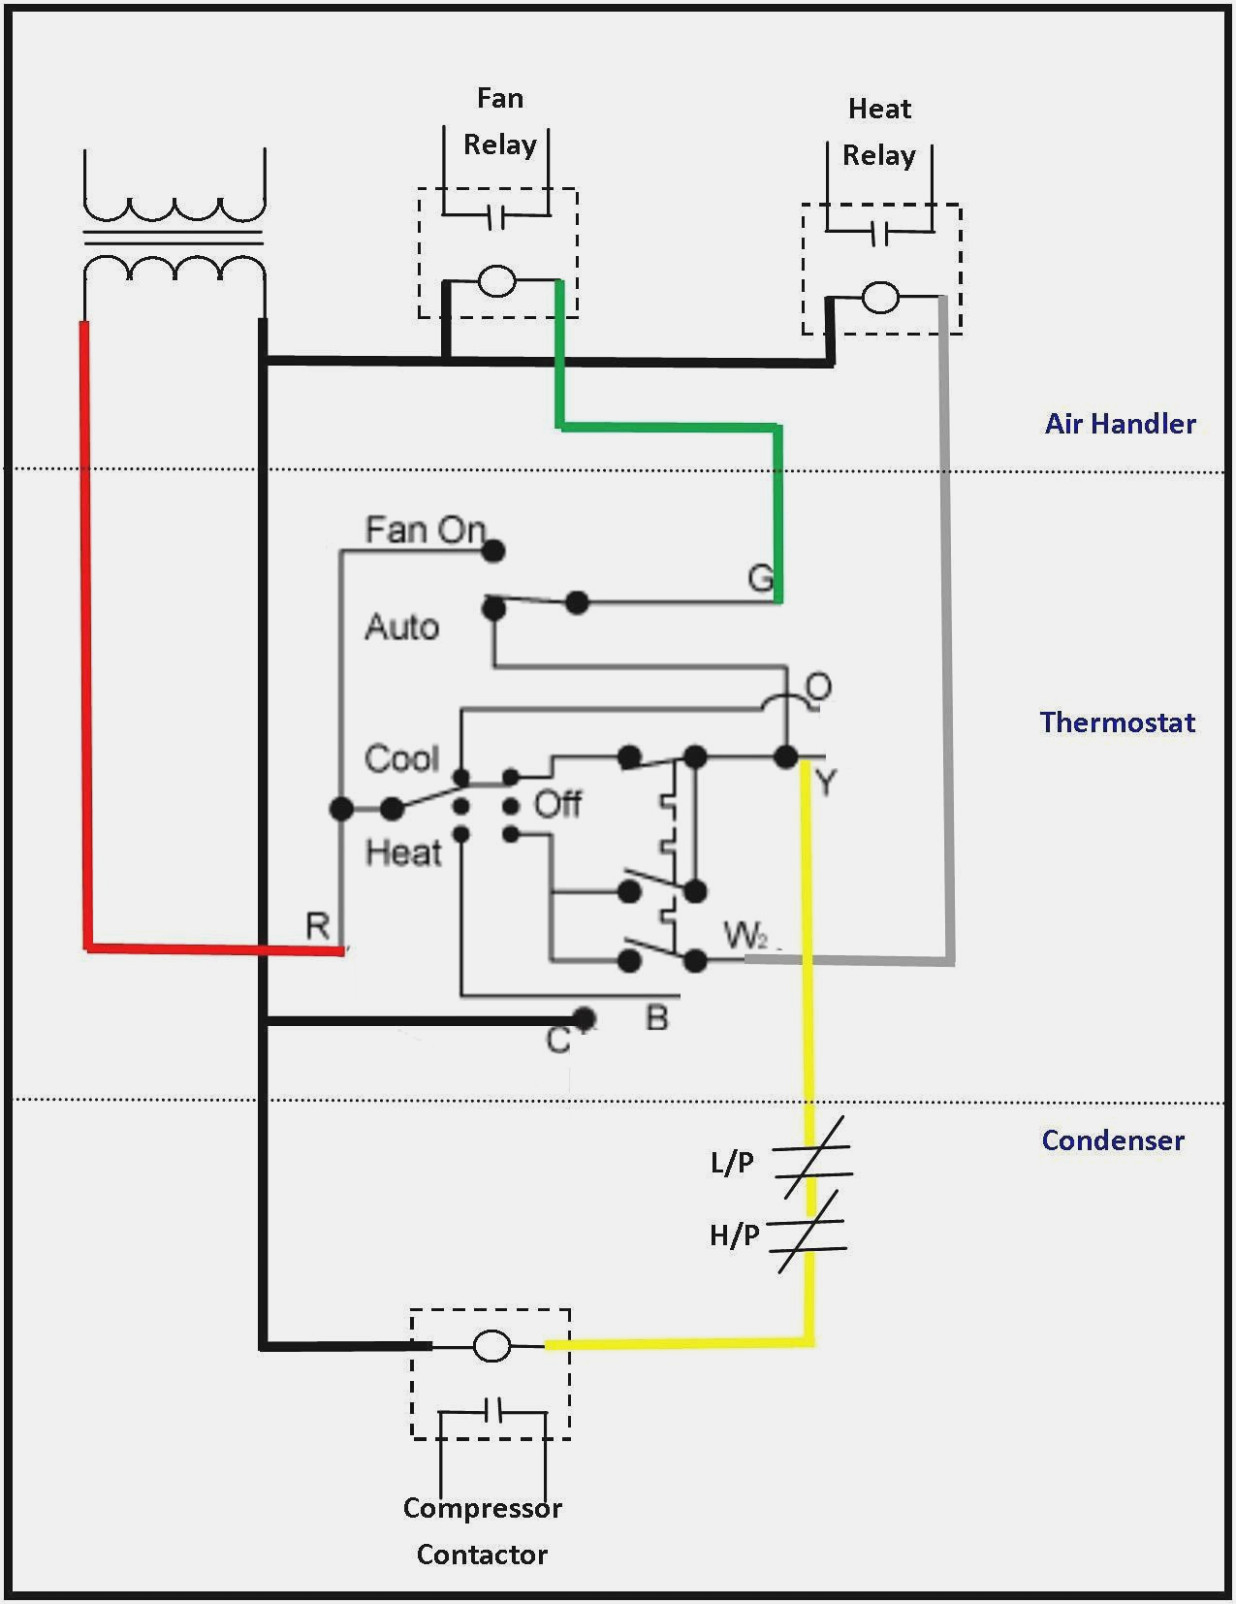 Wiring Diagram Maker Circuit Breaker Box Wiring Http Membersrennlistorg Warren Badgen4